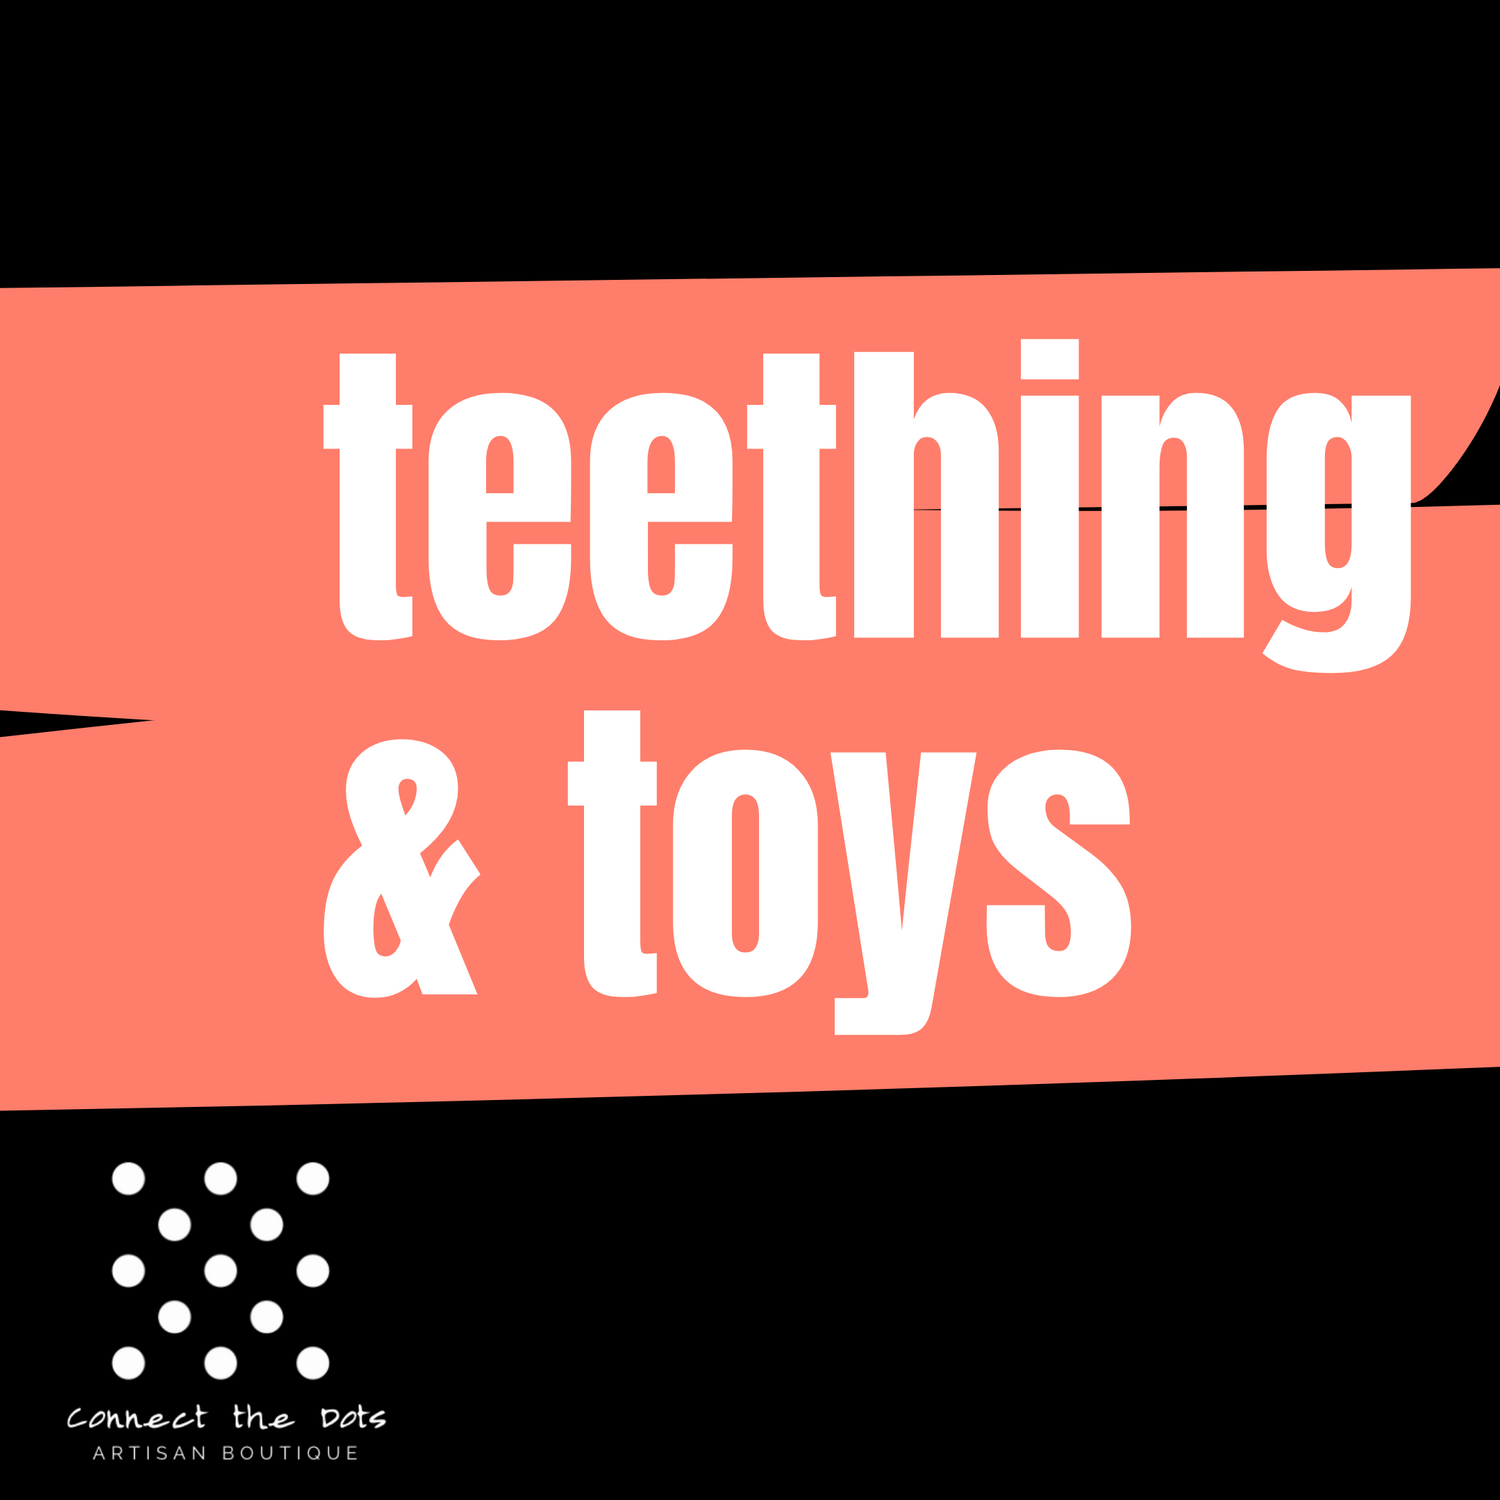 teething & toys